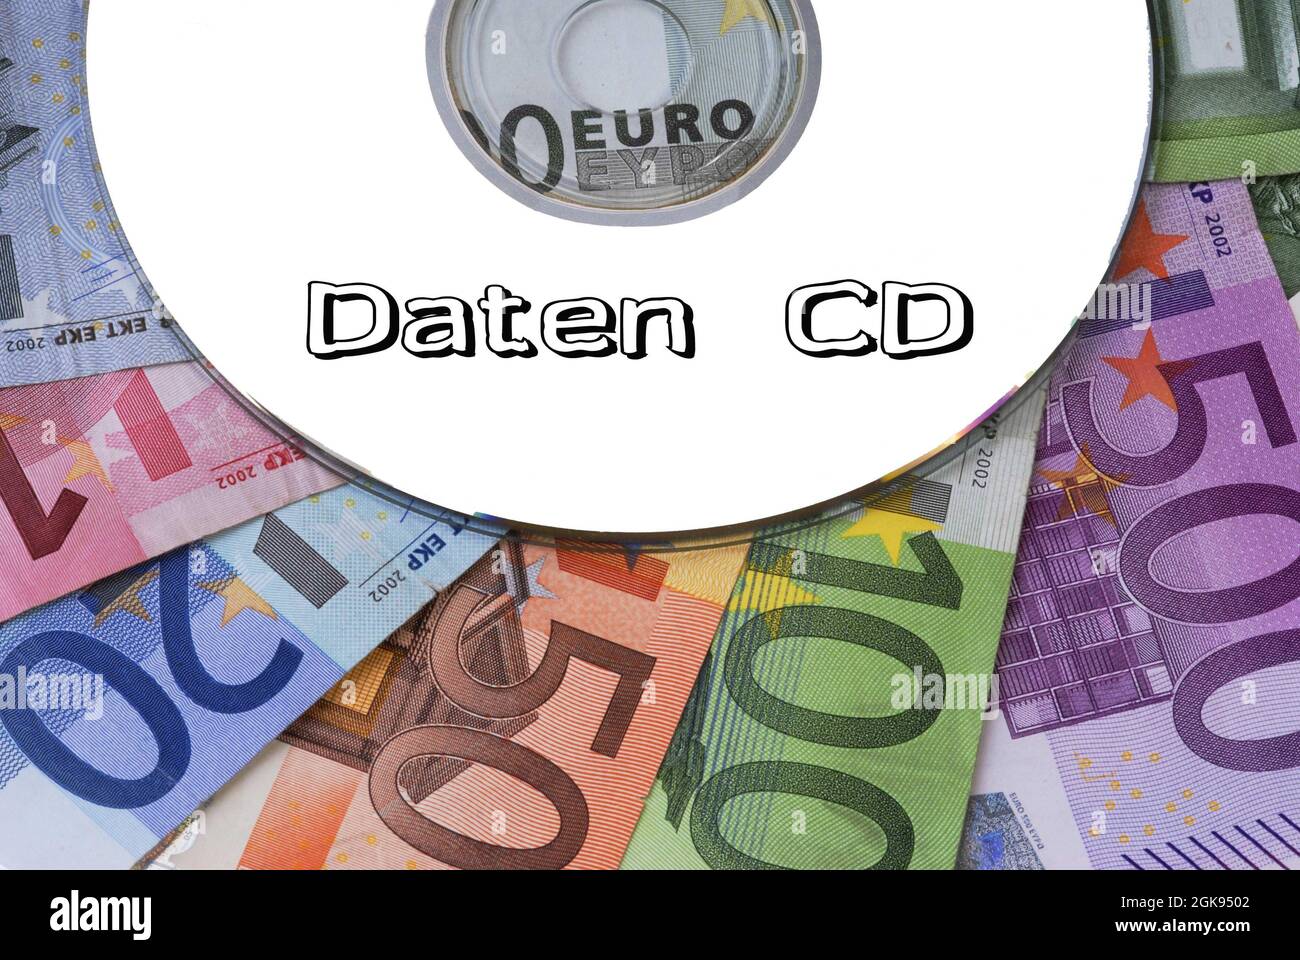 Euro fatture con CD, Germania, Vaihingen/Enz Foto Stock